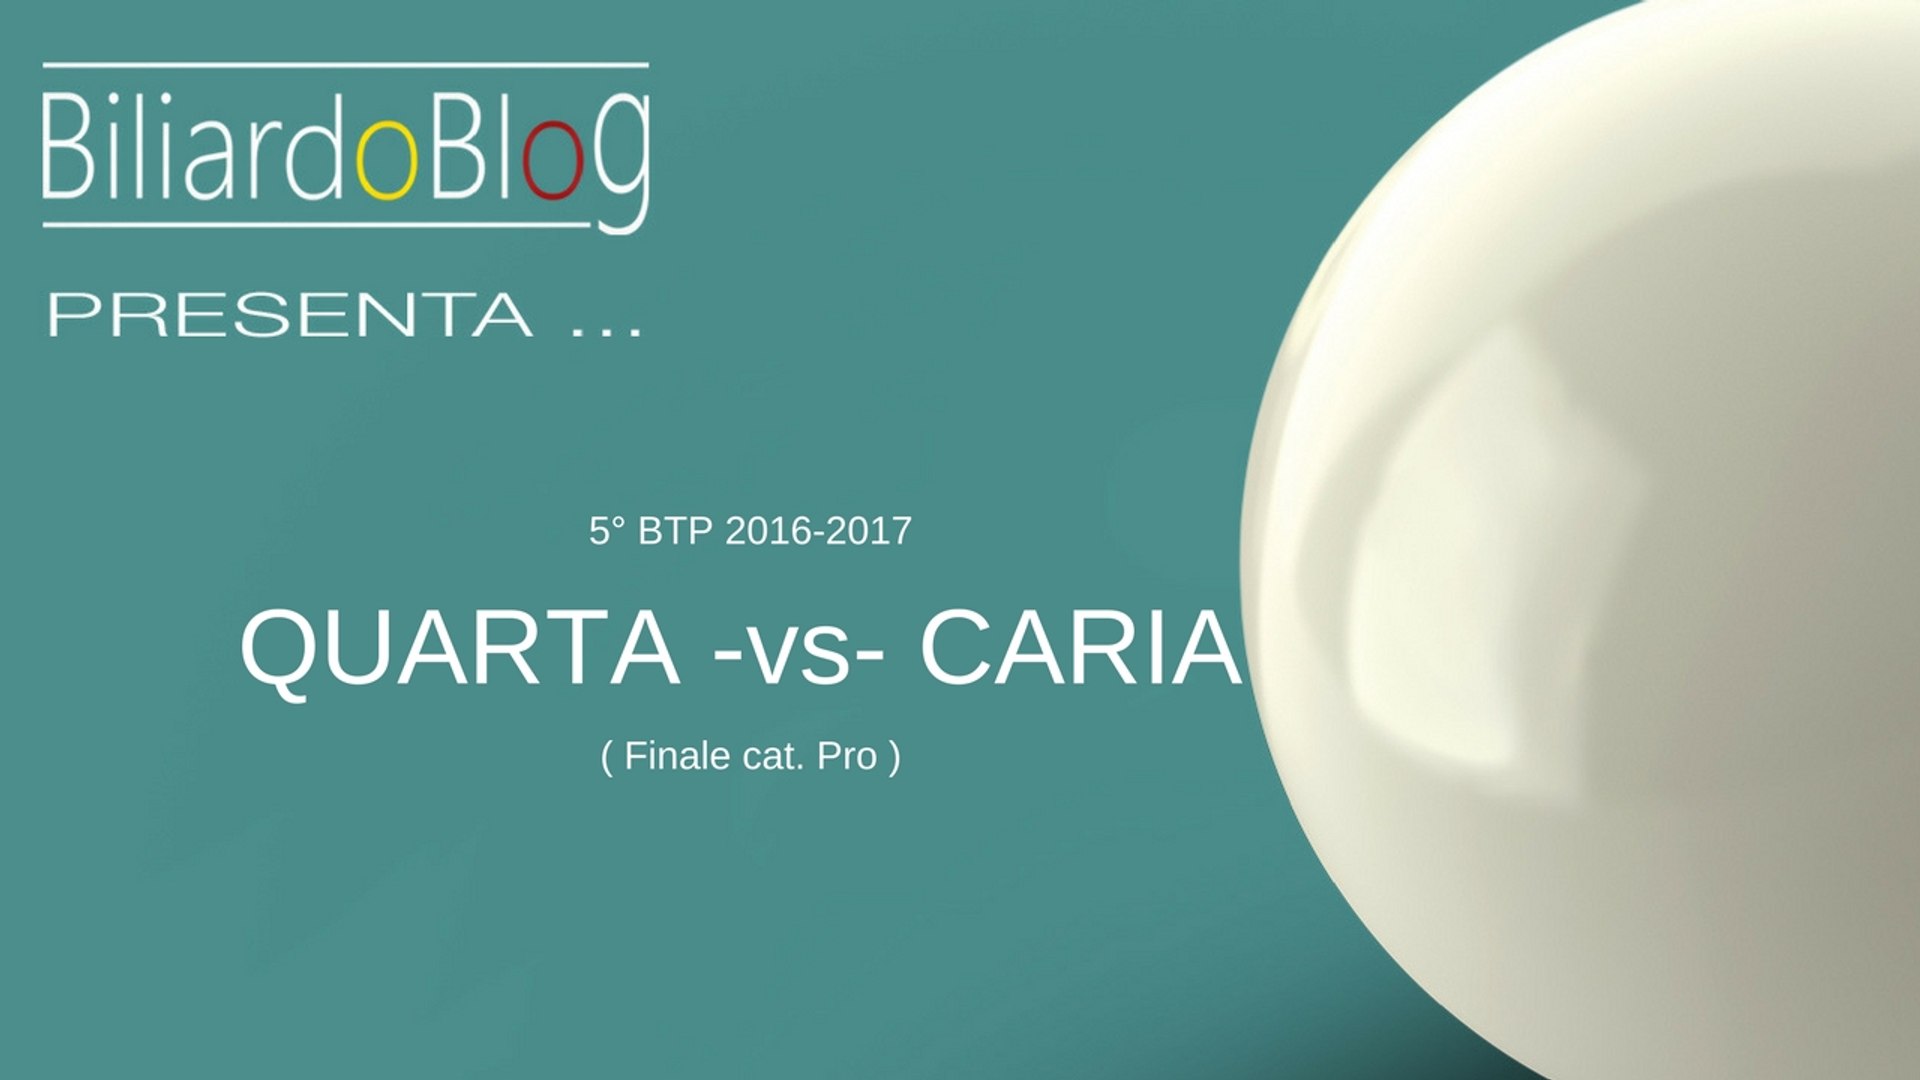 Quarta -vs- Caria: Finale 5°BTP 2016-2017 - Video Dailymotion